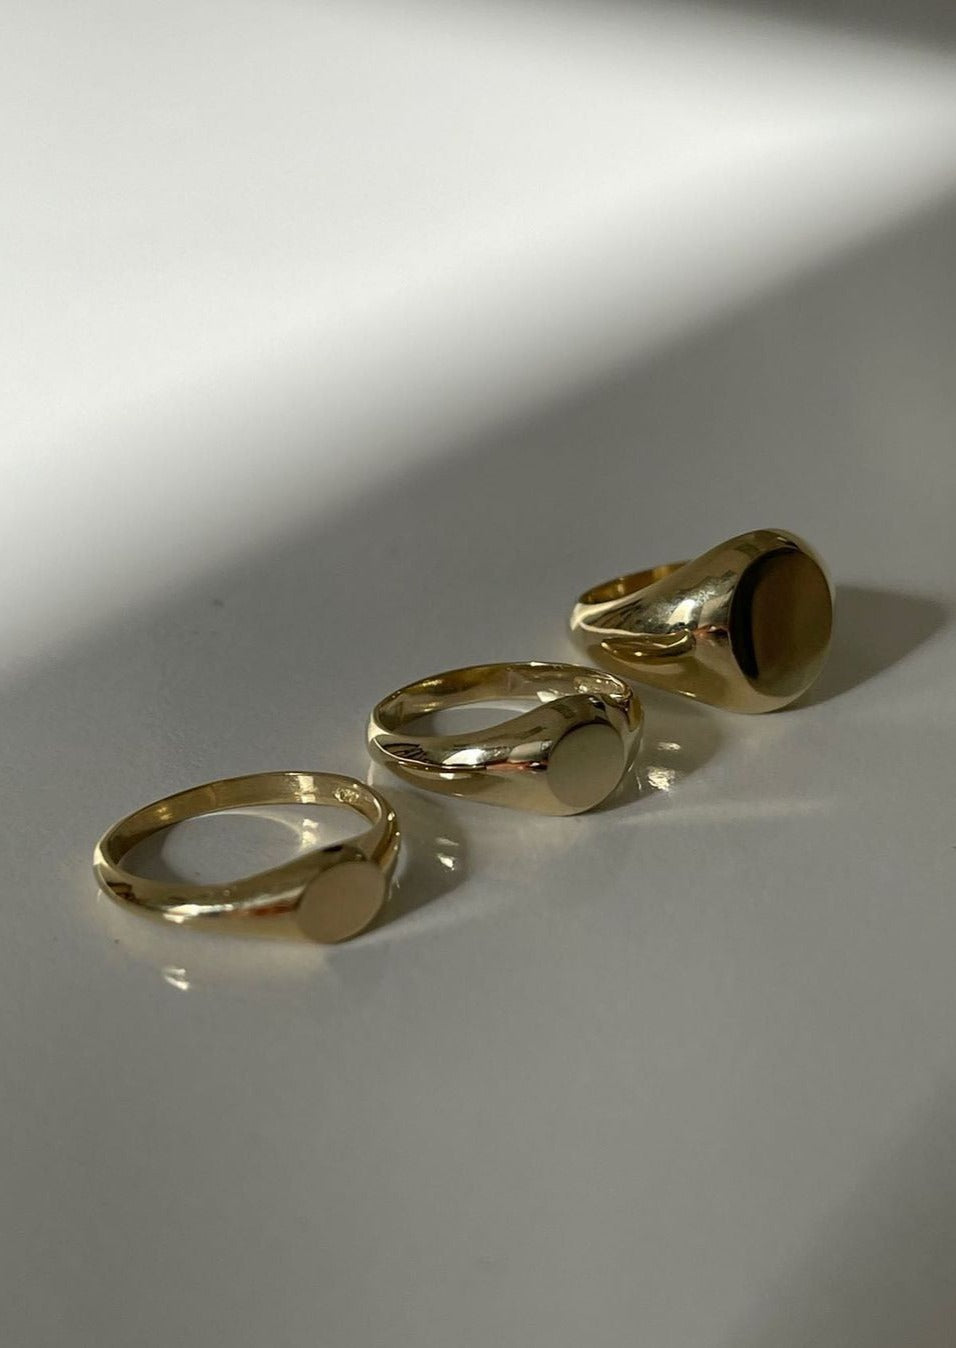 alt="Petite Signet Ring with medium signet ring and classic signet ring"